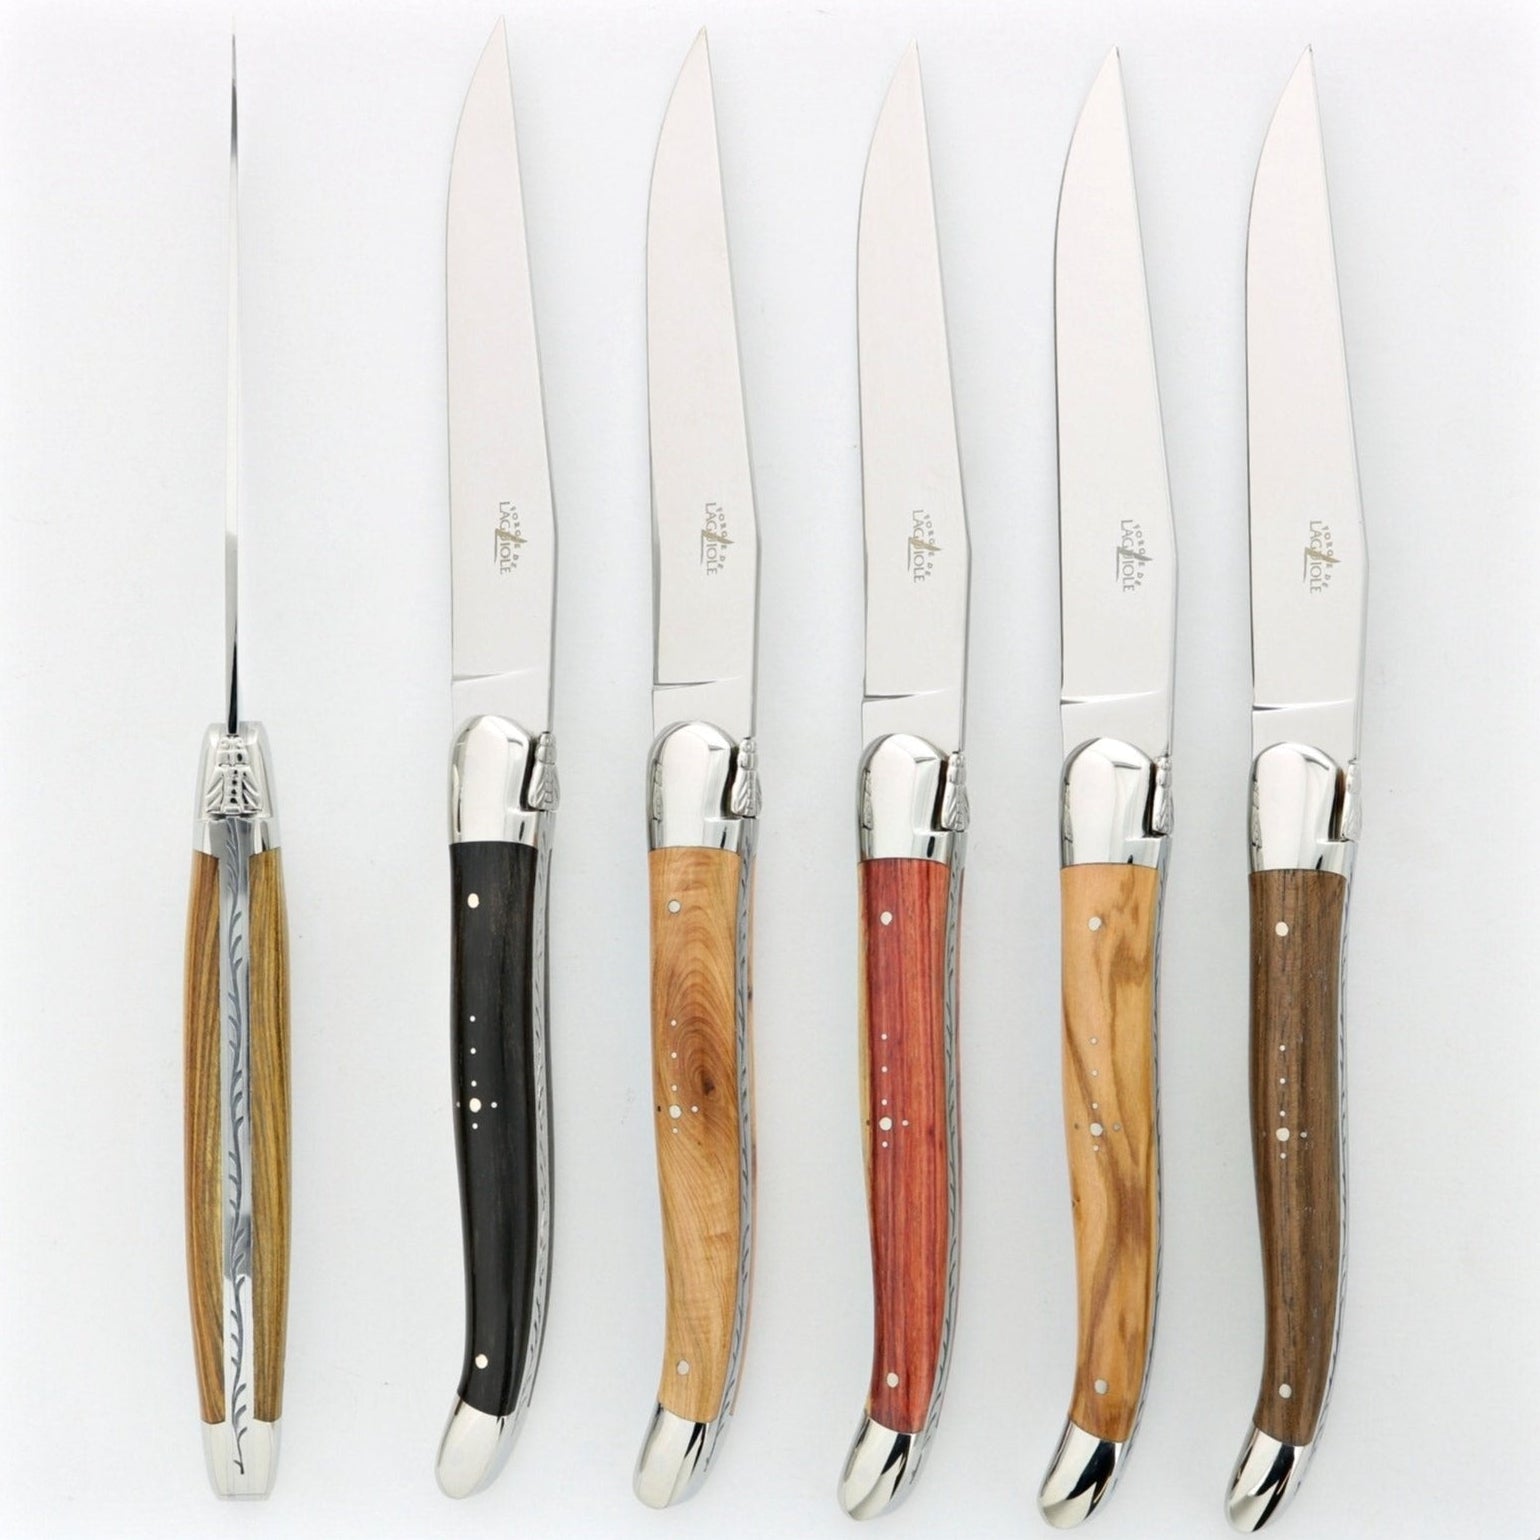 Laguiole Steak Knives Set of 6 – Juniper wood